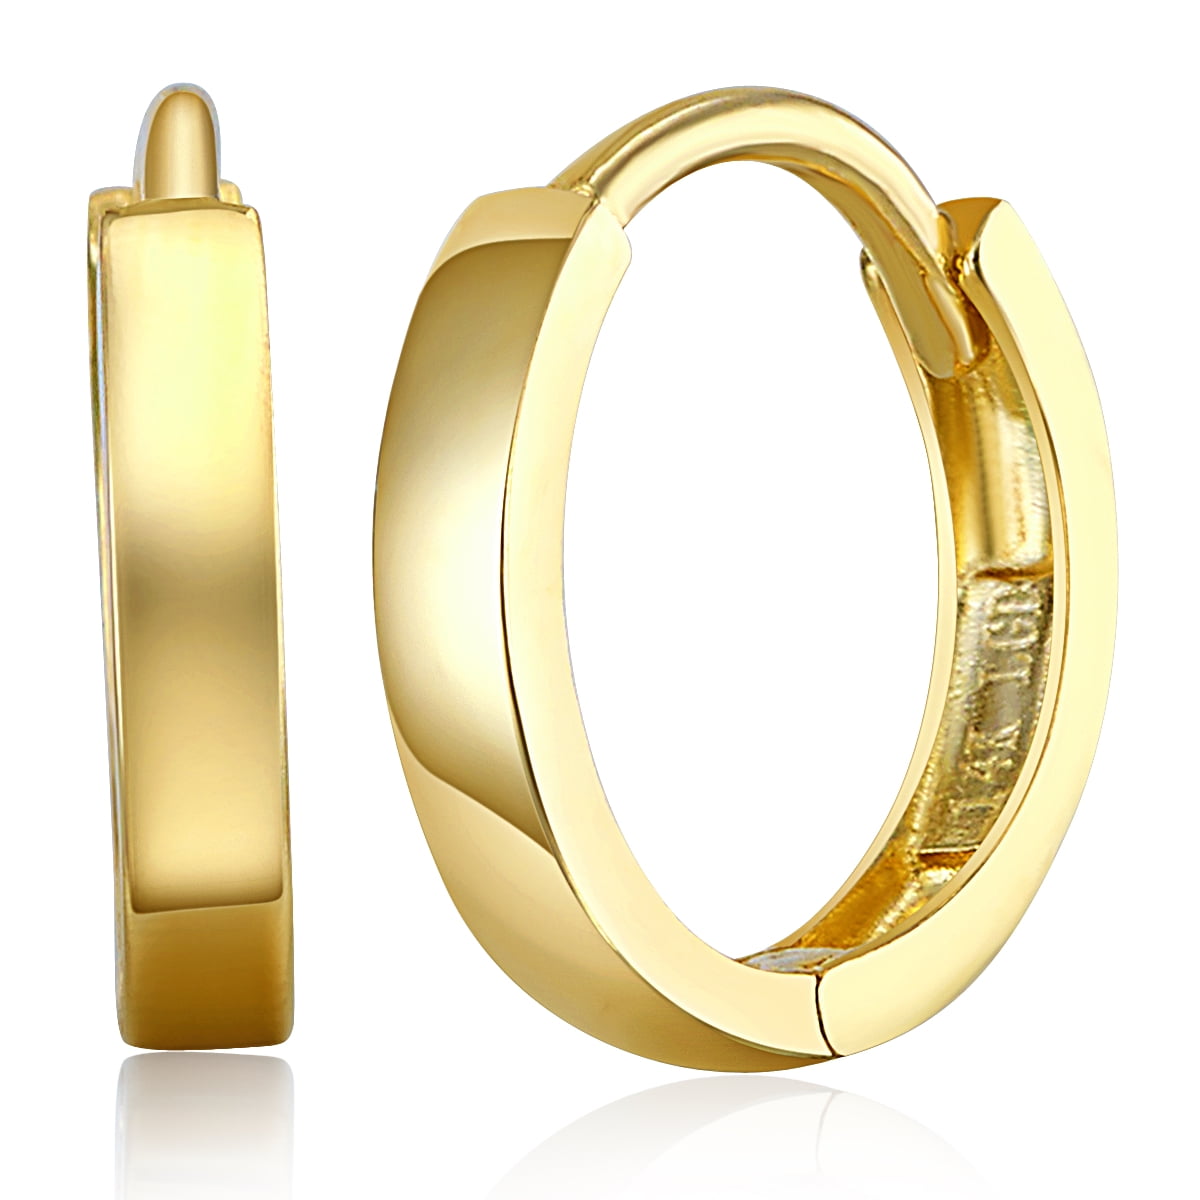 35 x 22 mm Wellingsale Ladies 14k Yellow Gold Polished Wired Oval Hoop Earrings